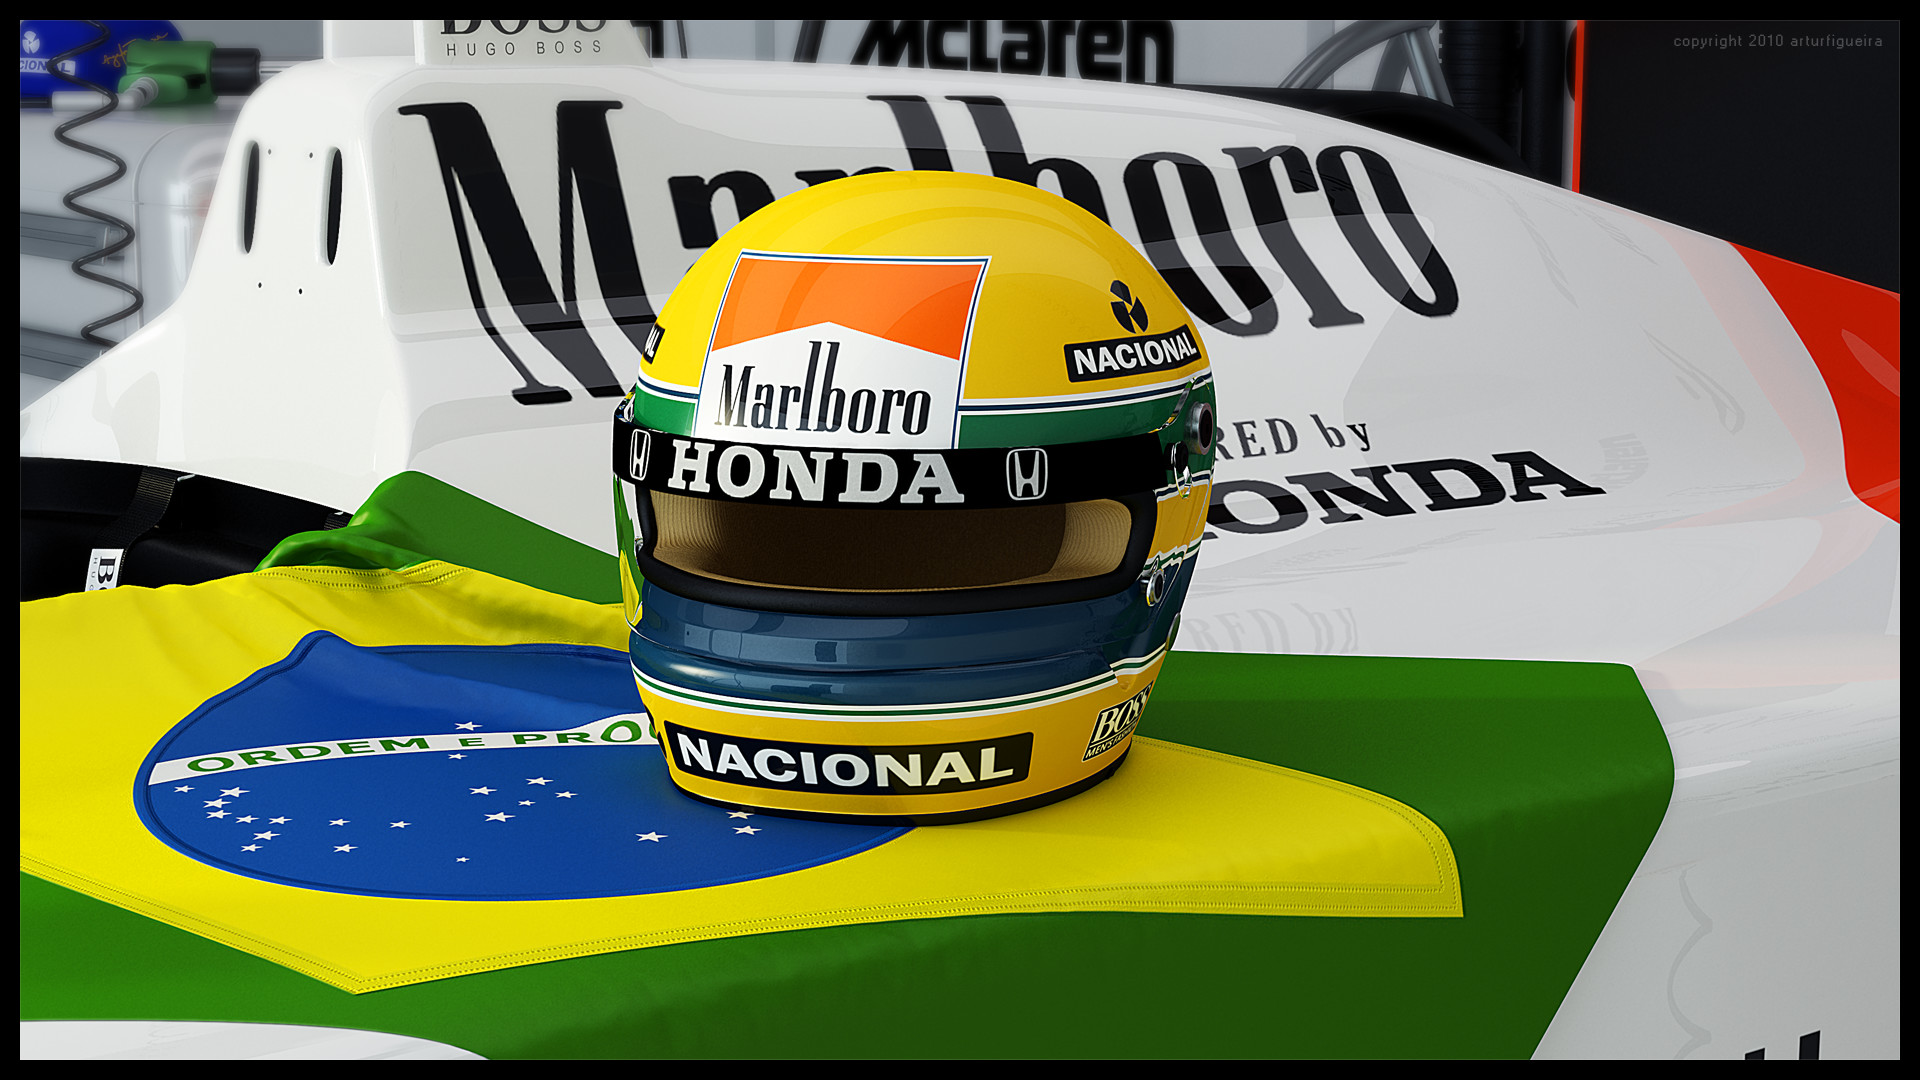 1920x1080 190 best Ayrton Senna images on Pinterest | Ayrton senna, Formula 1 and  Heroes